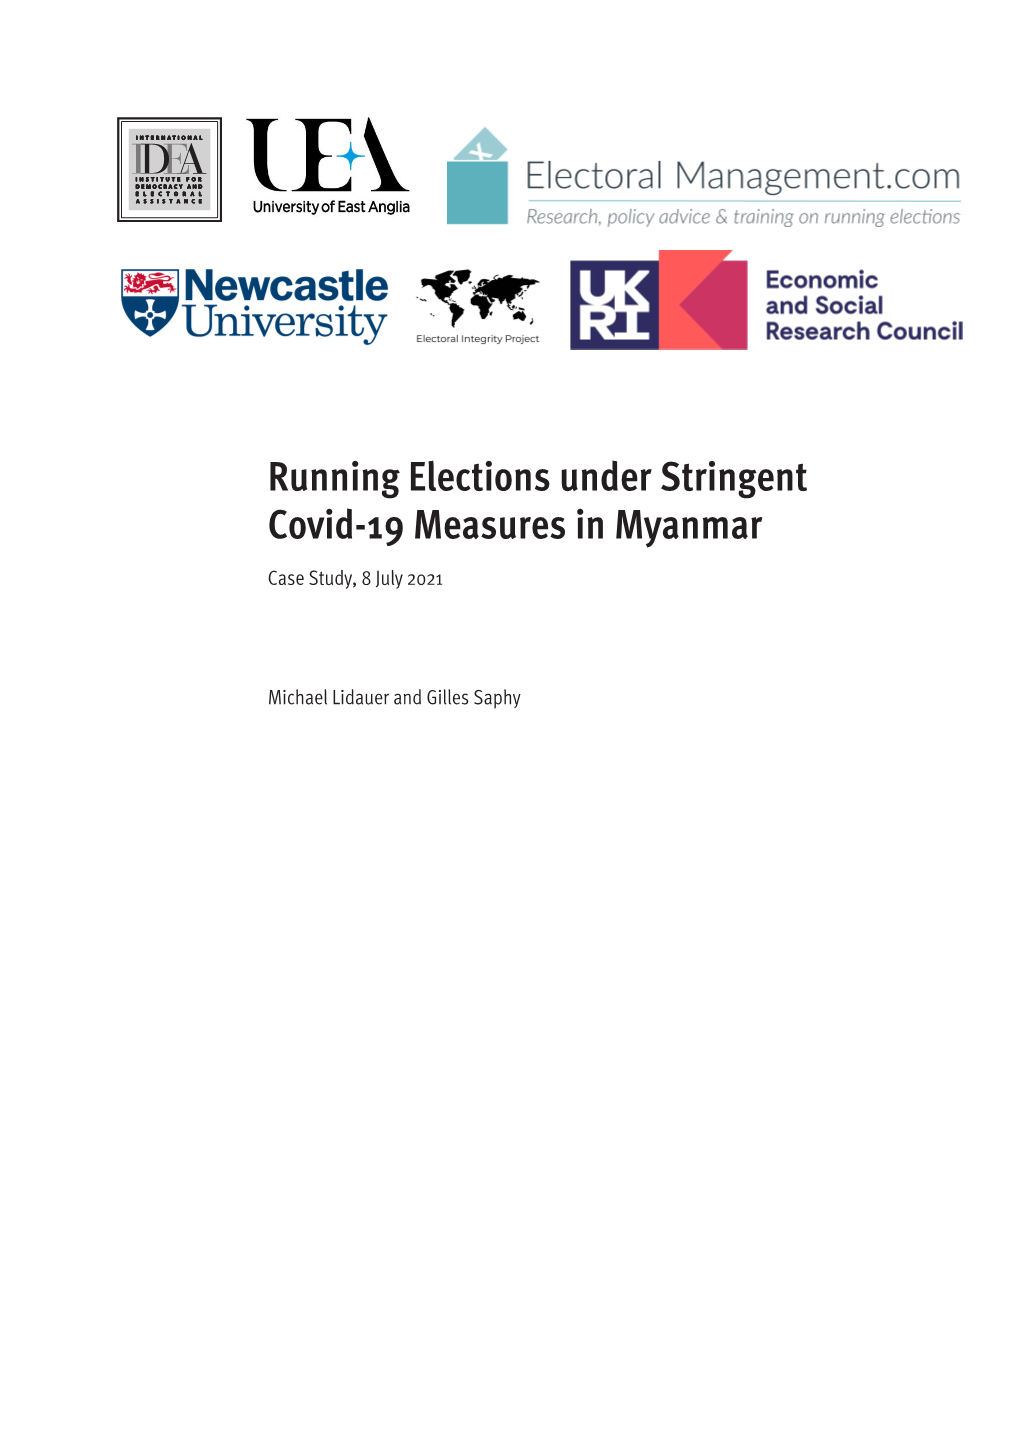 Running Elections Under Stringent Covid-19 Measures in Myanmar